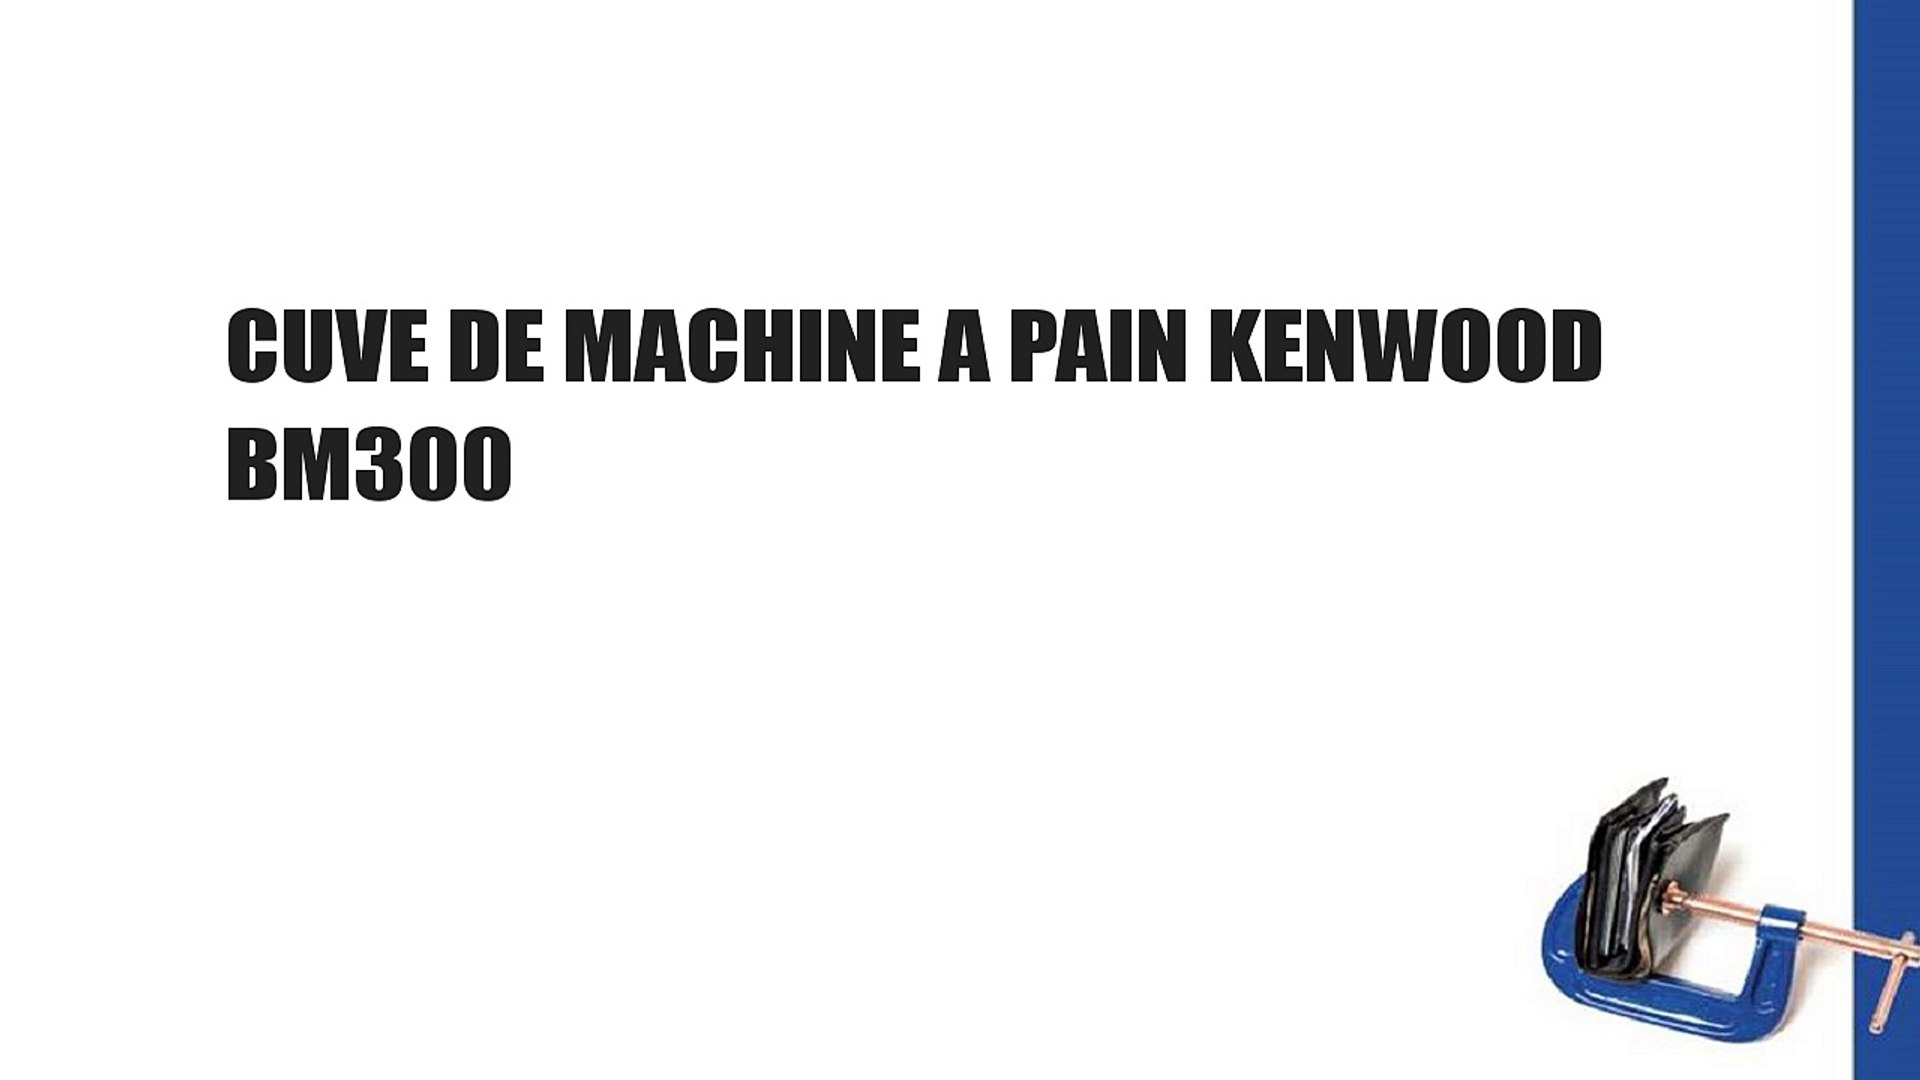 CUVE DE MACHINE A PAIN KENWOOD BM300 - video Dailymotion